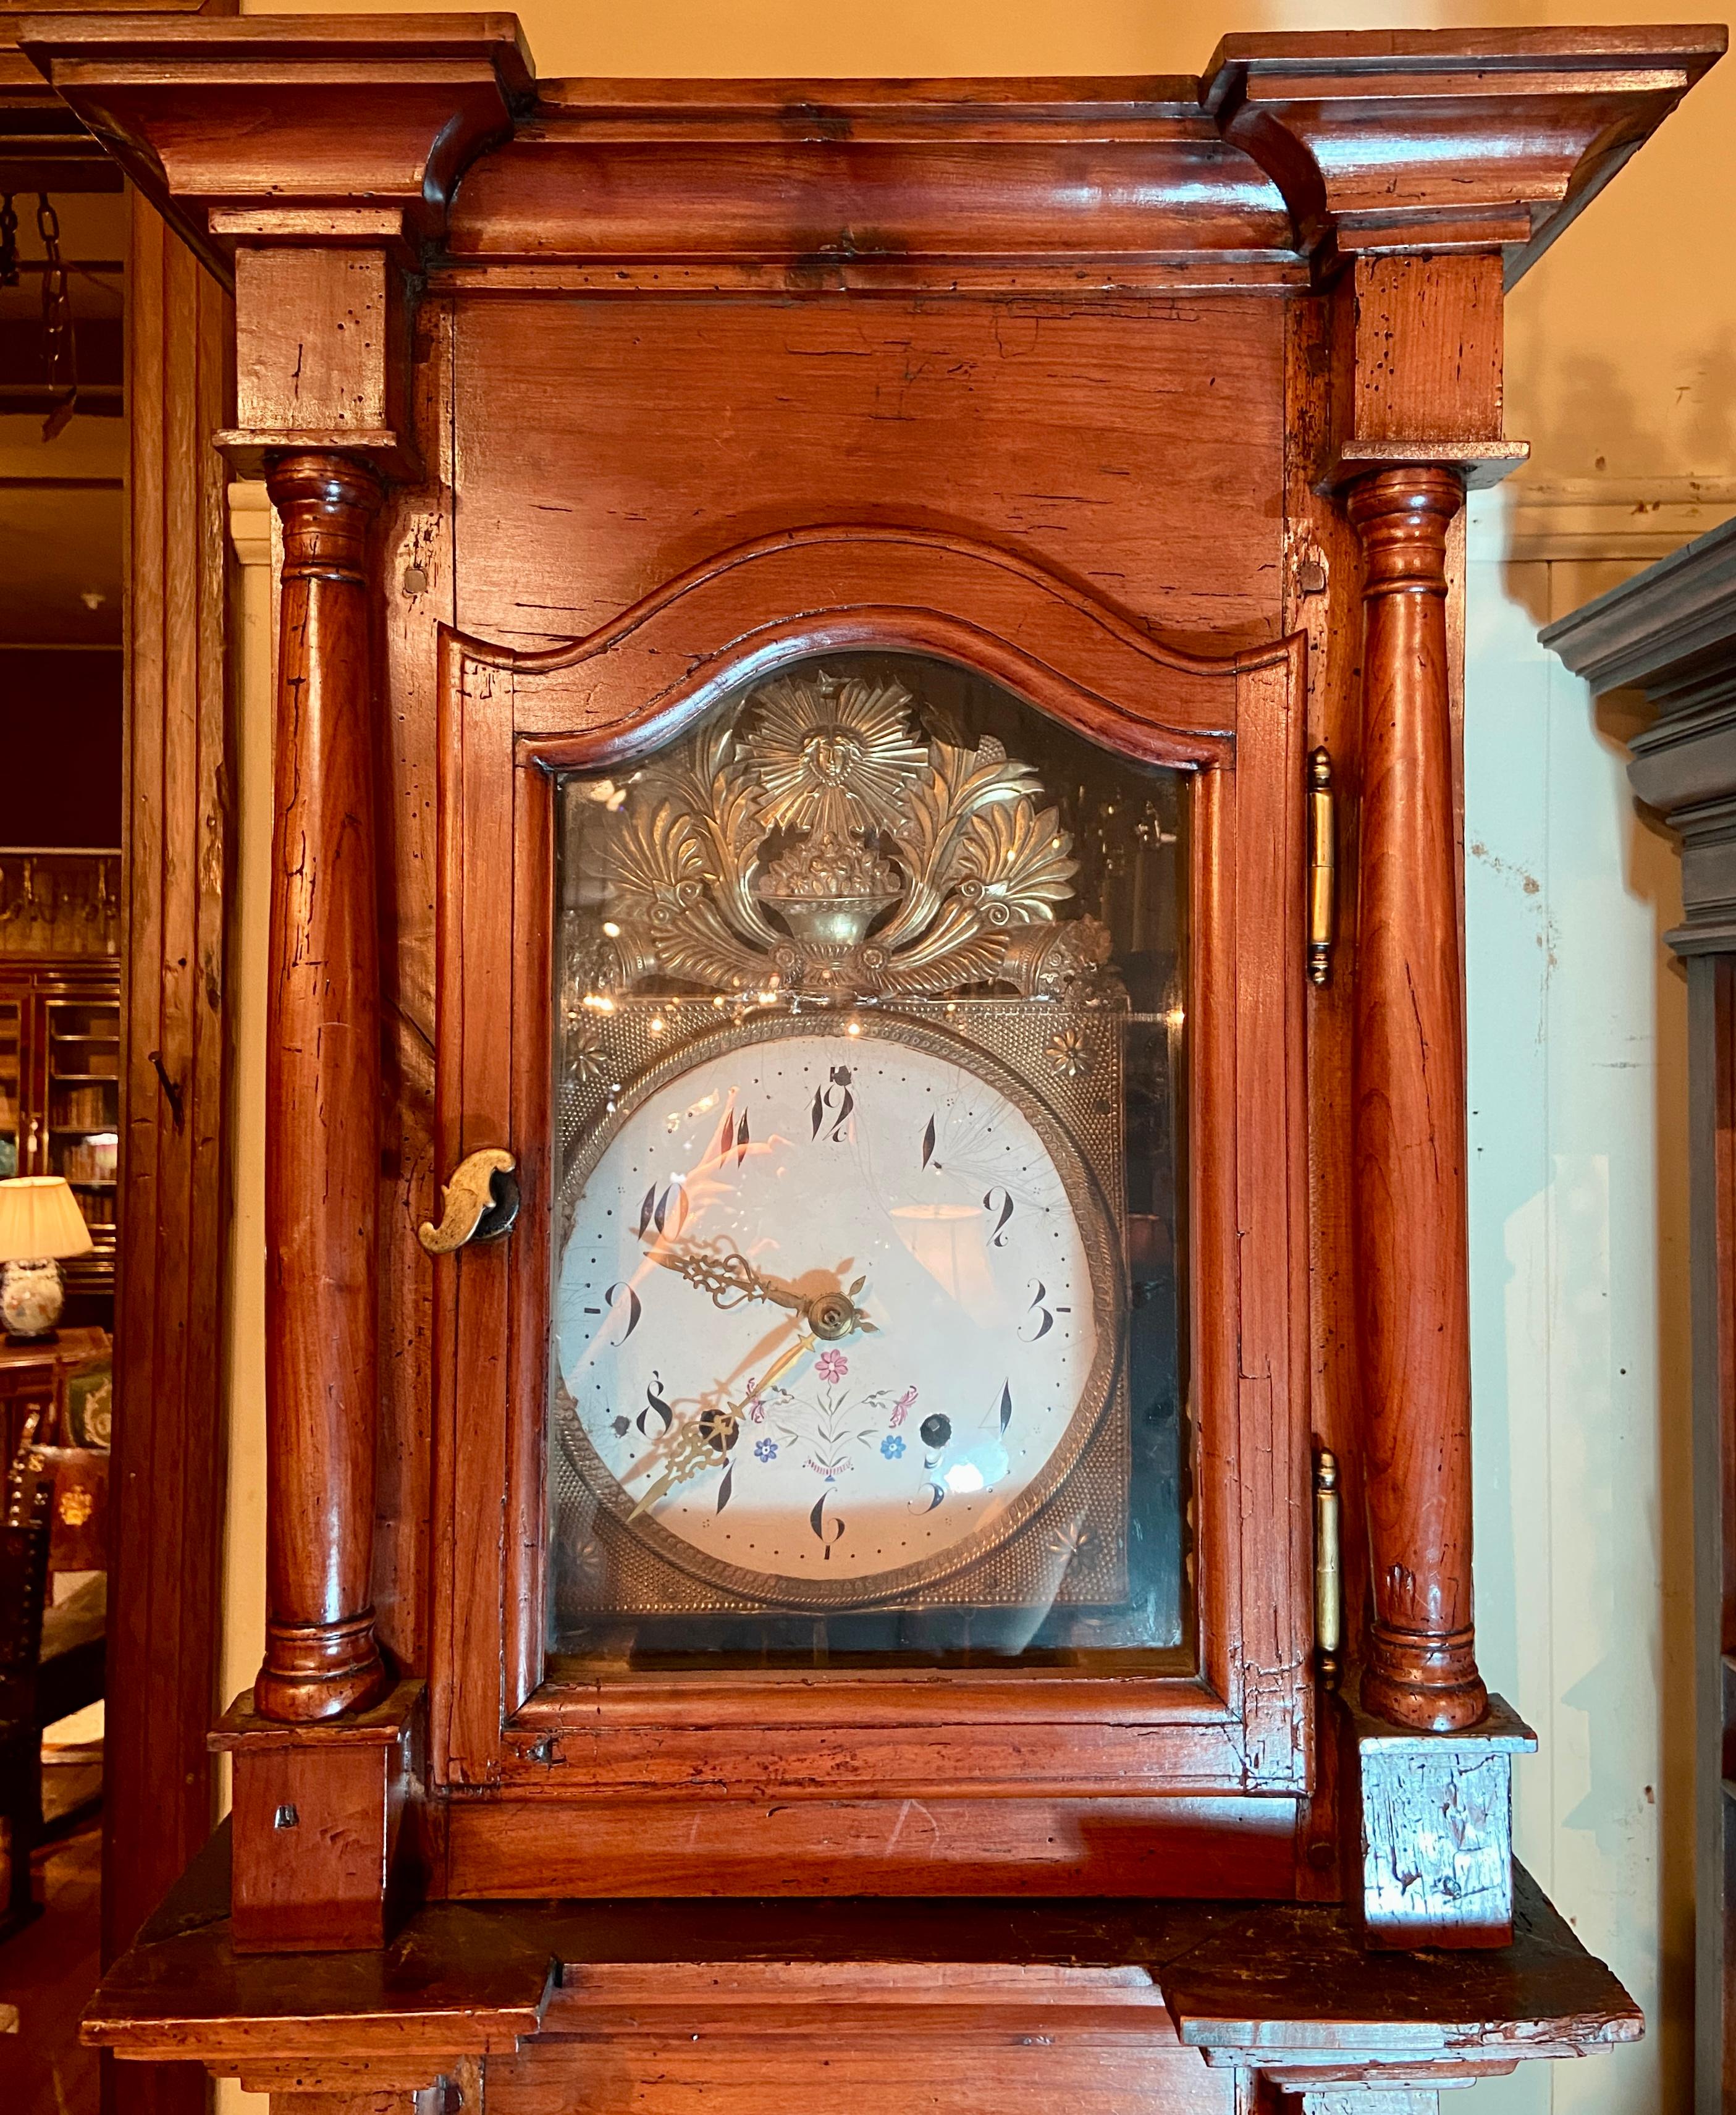 Antique French provincial grandfather clock, circa 1870-1880.